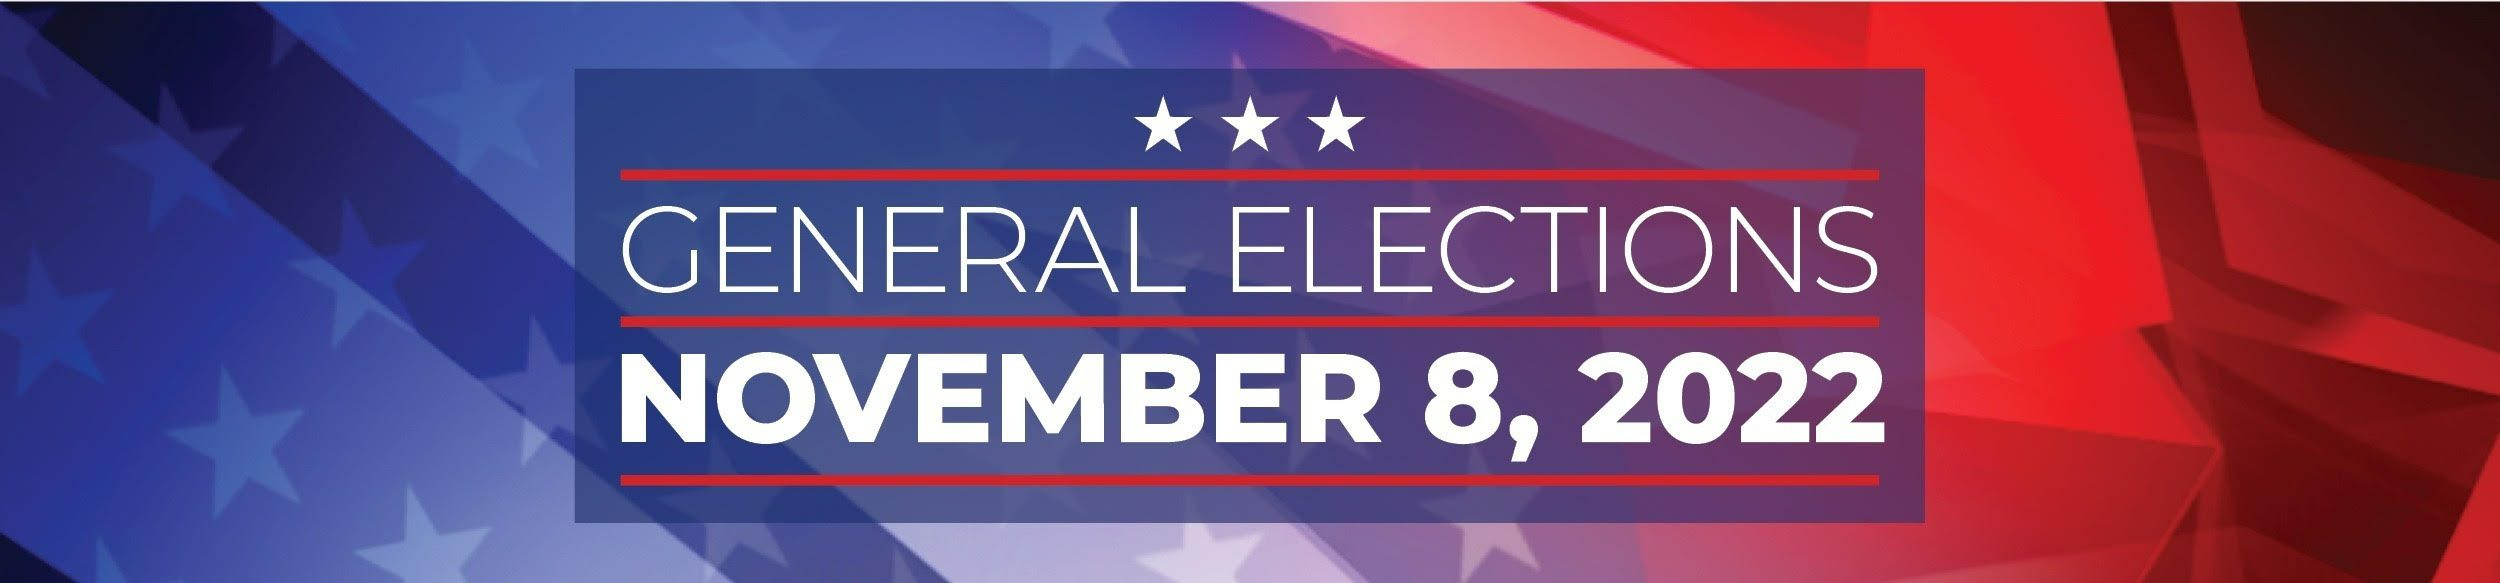 General Elections - November 8, 2022